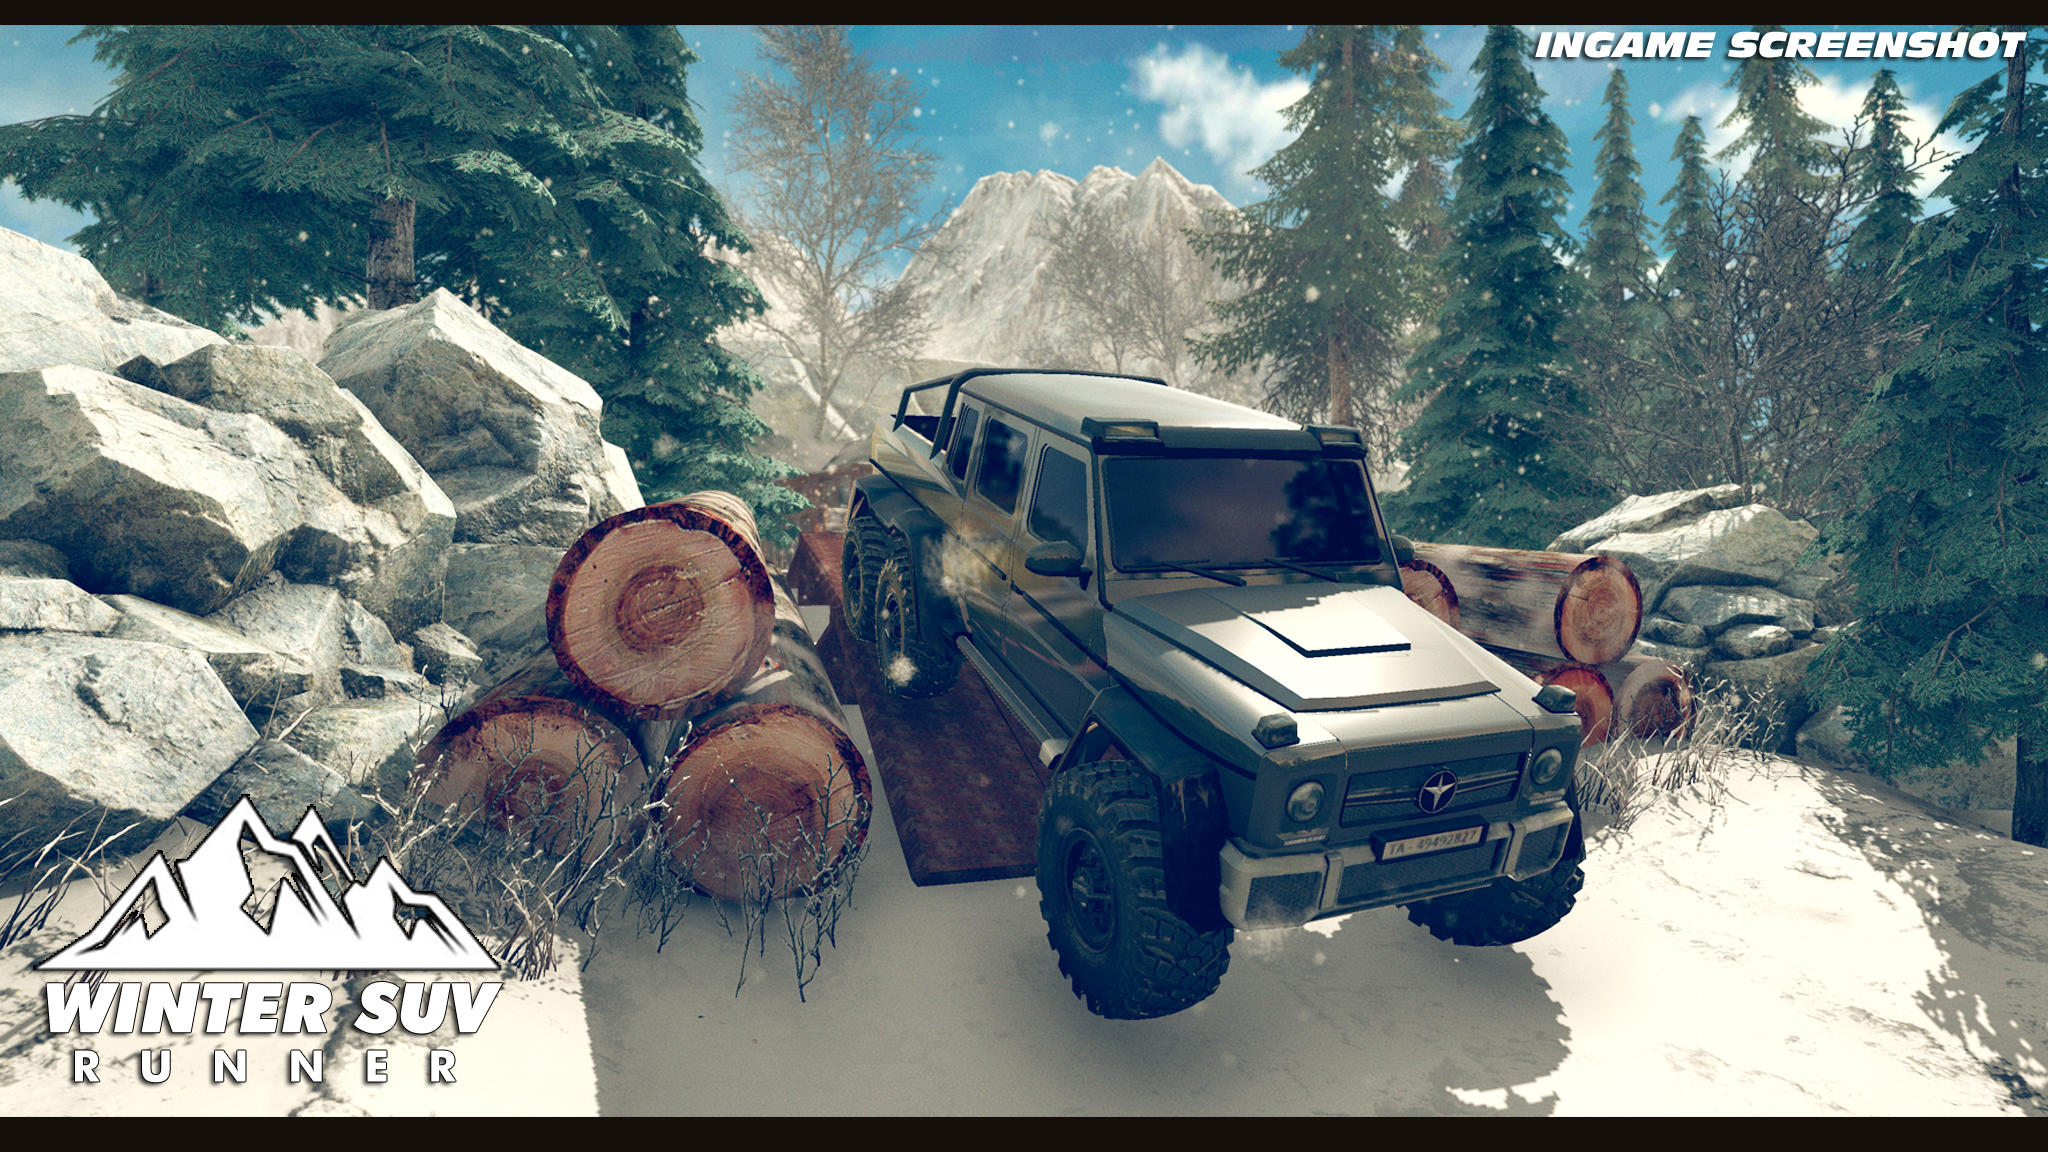 Screenshot of Winter SUV Mountains Runner